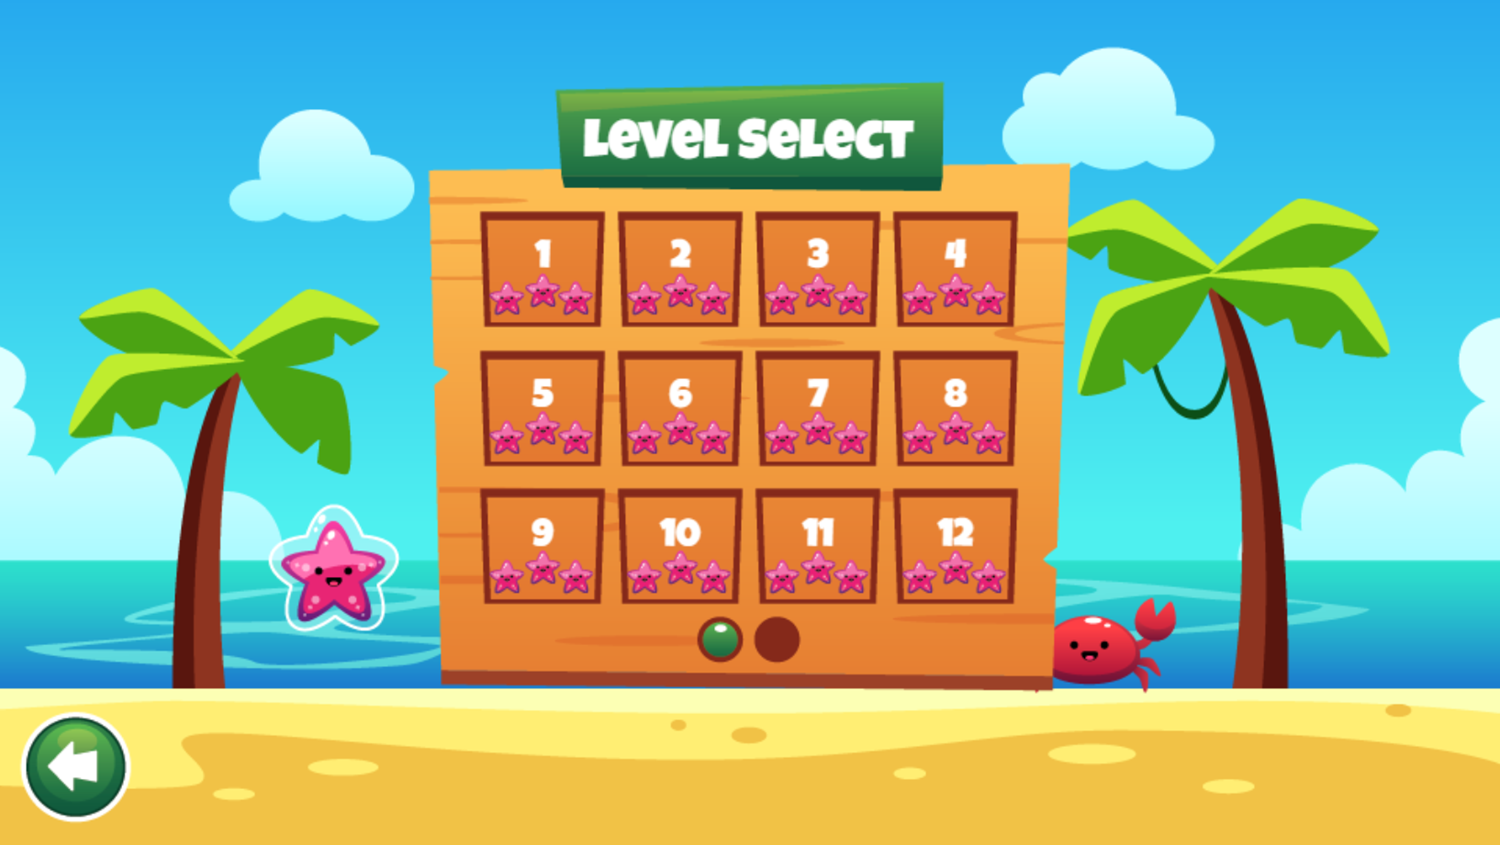 Beach Soccer Game Level Select Screen Screenshot.